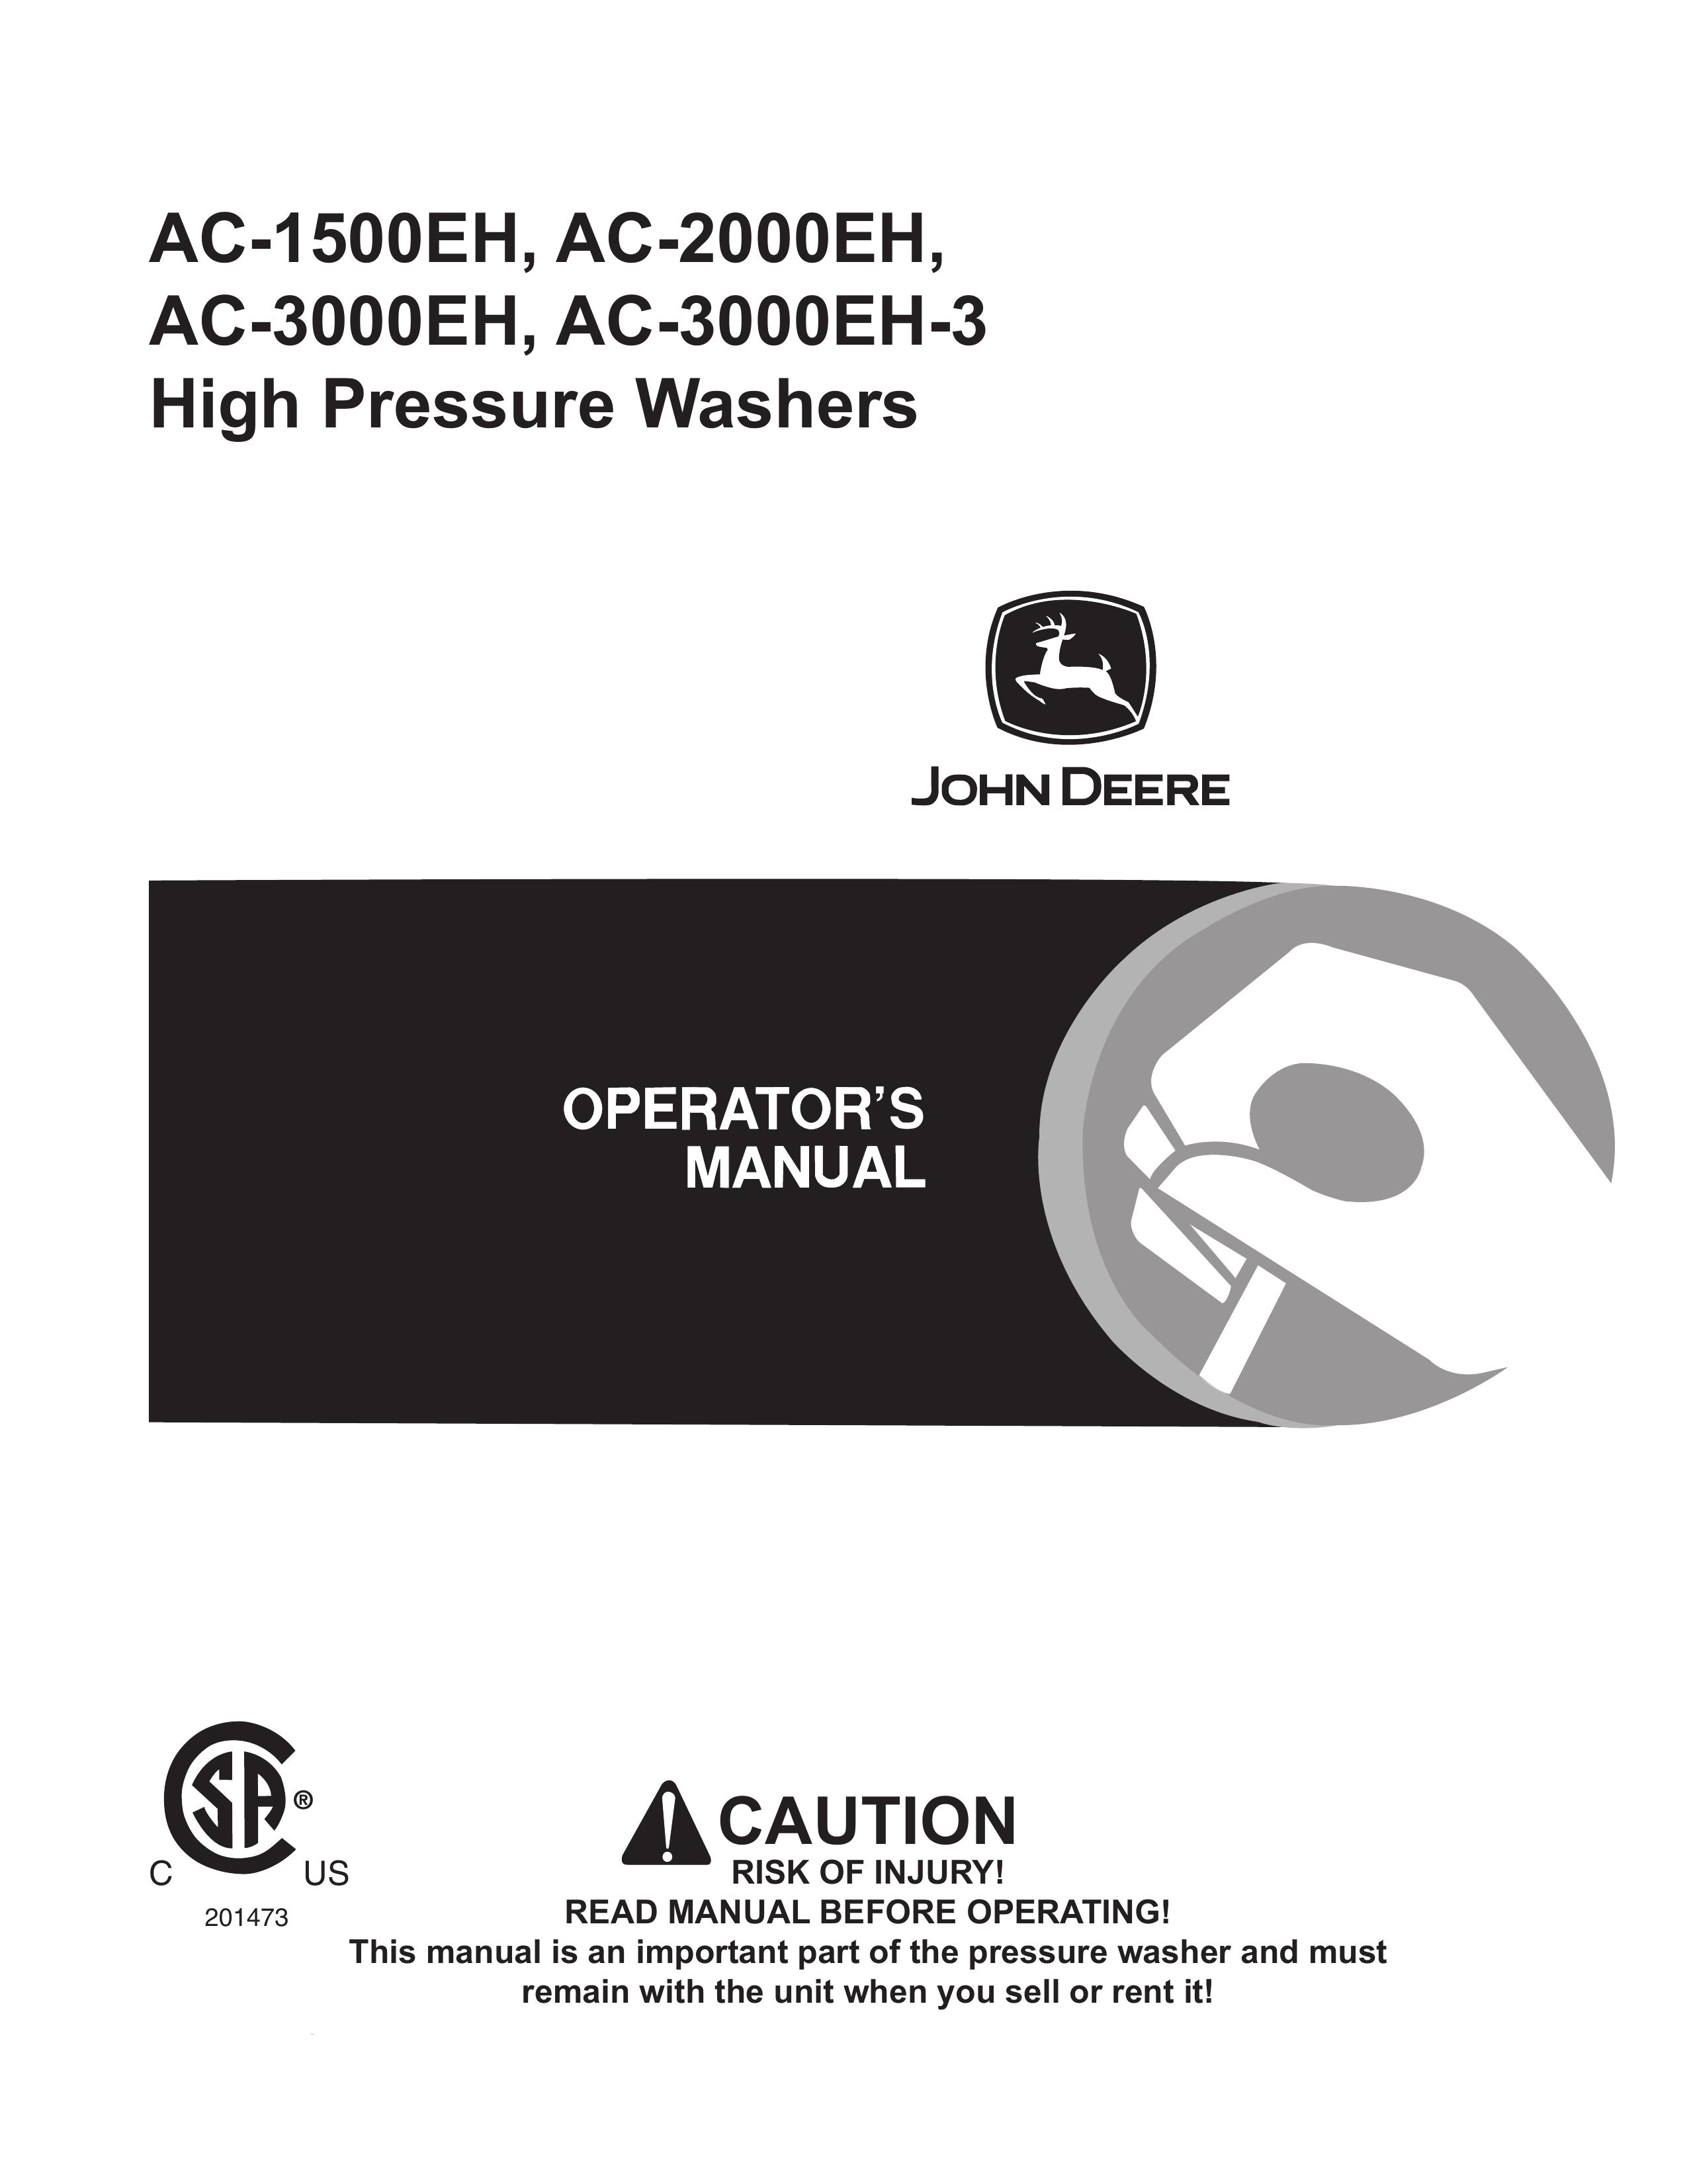 John Deere AC-1500EH Washer User Manual